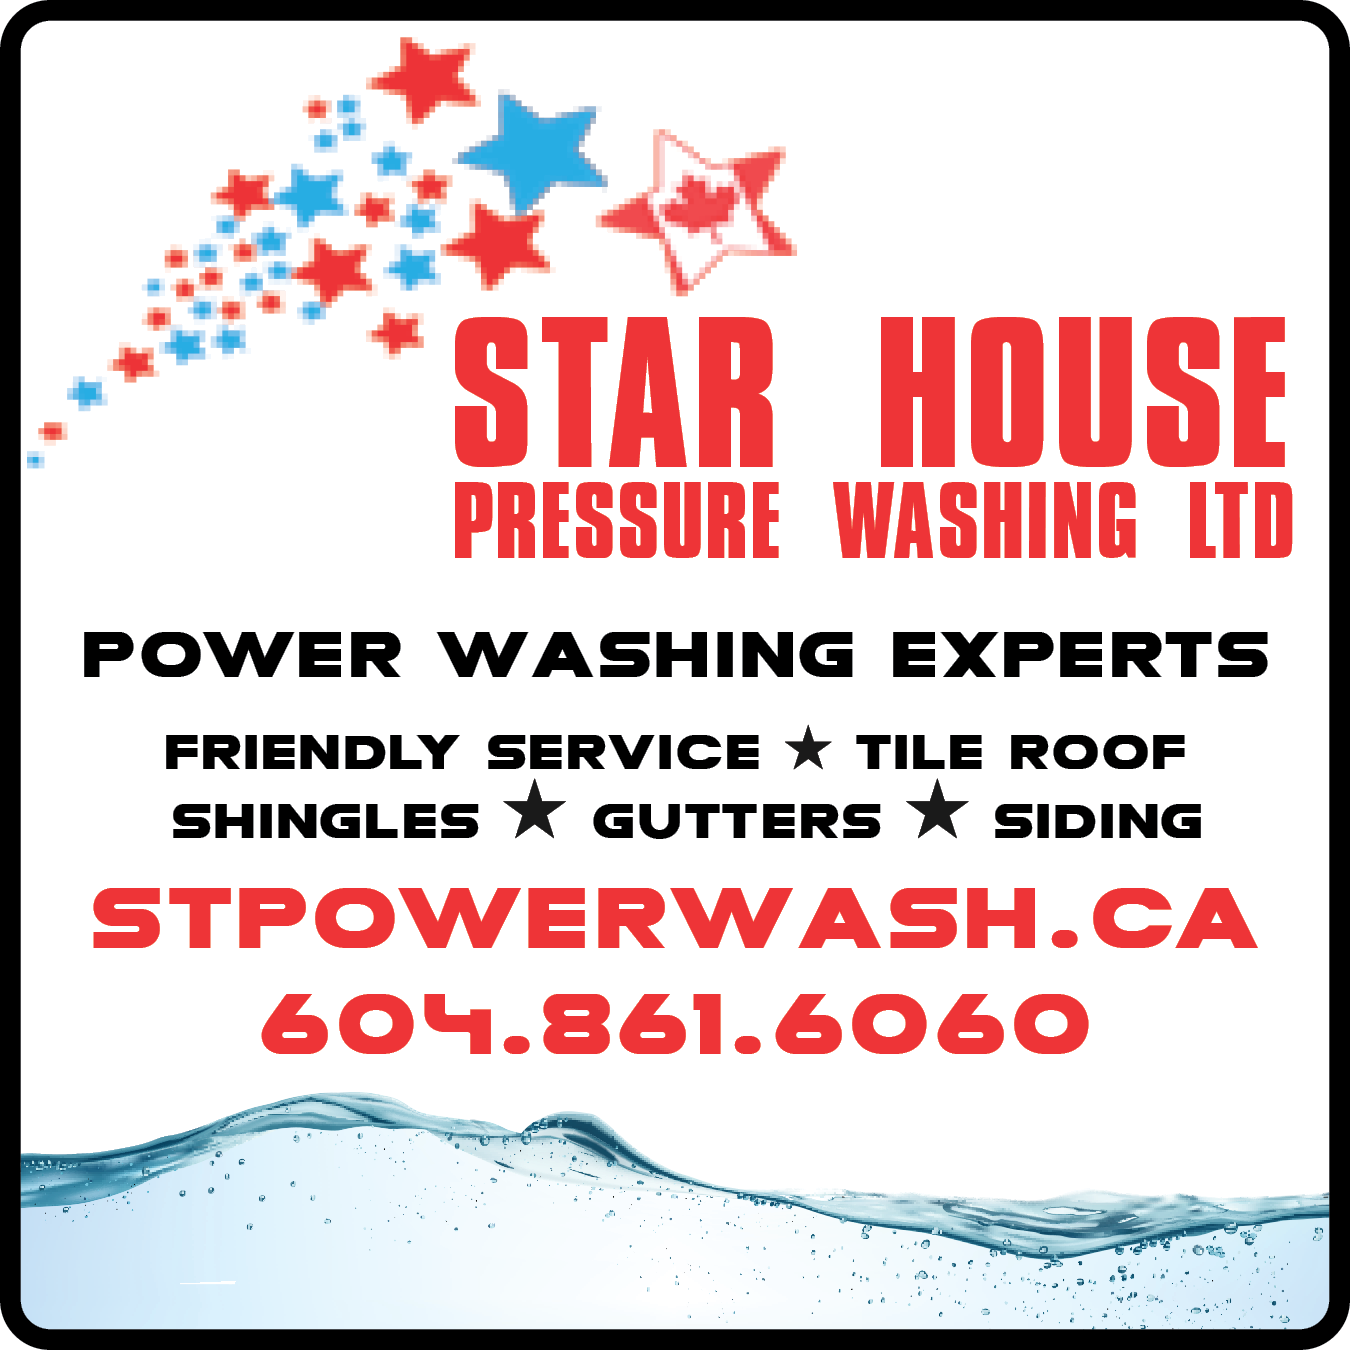 Star House Pressure Washing LTD